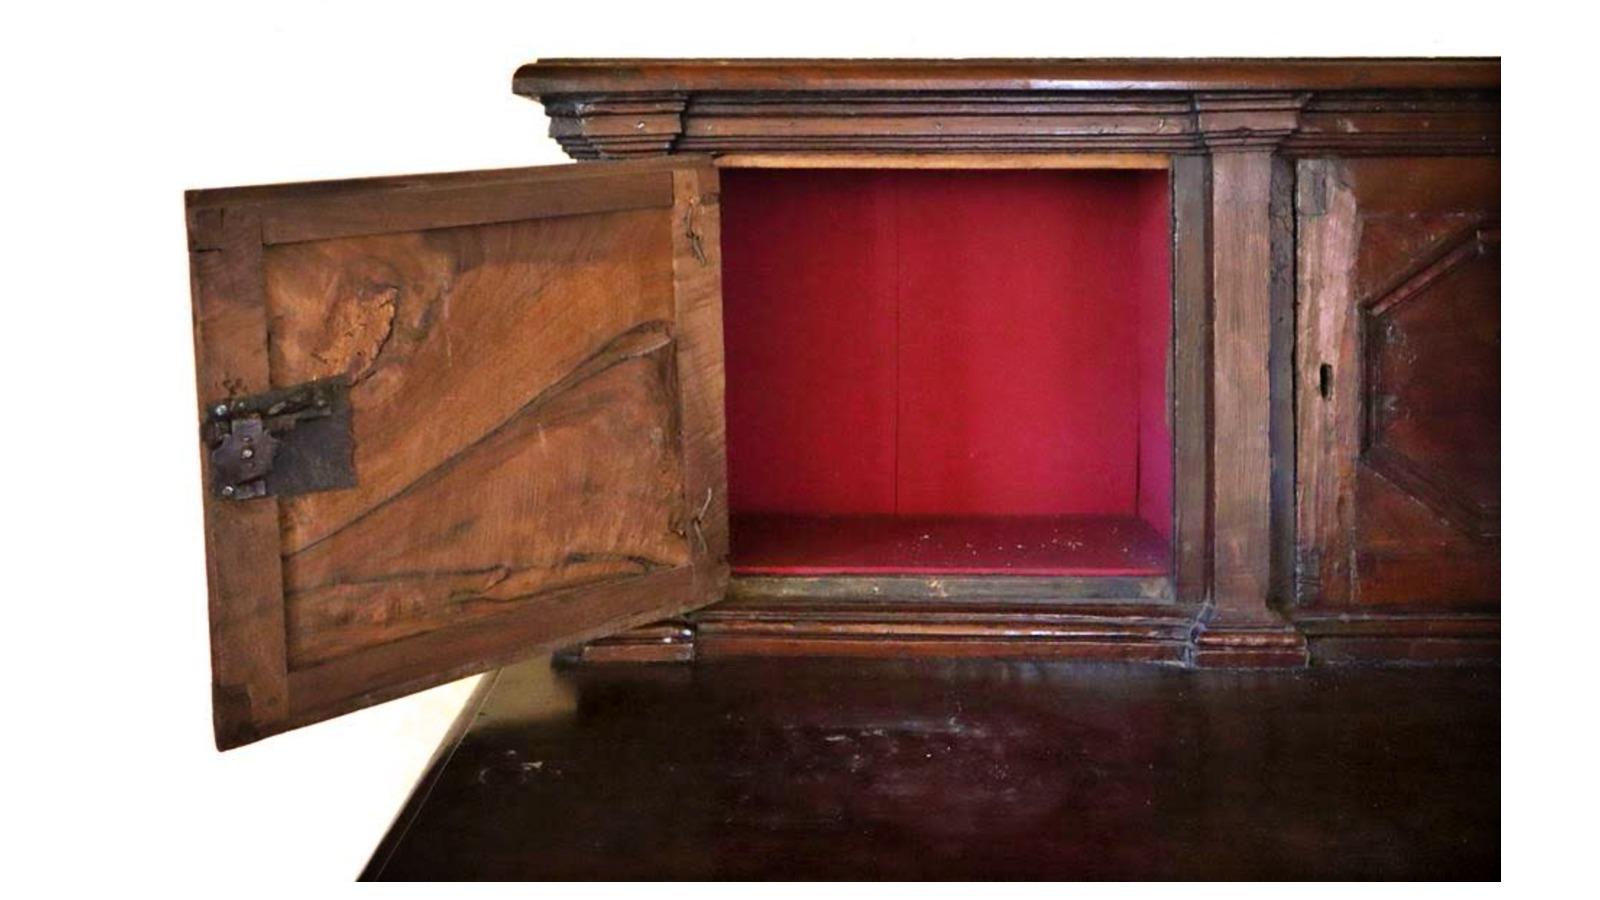 Baroque Important Italian Sacristy Furniture in Walnut 17th Century Century